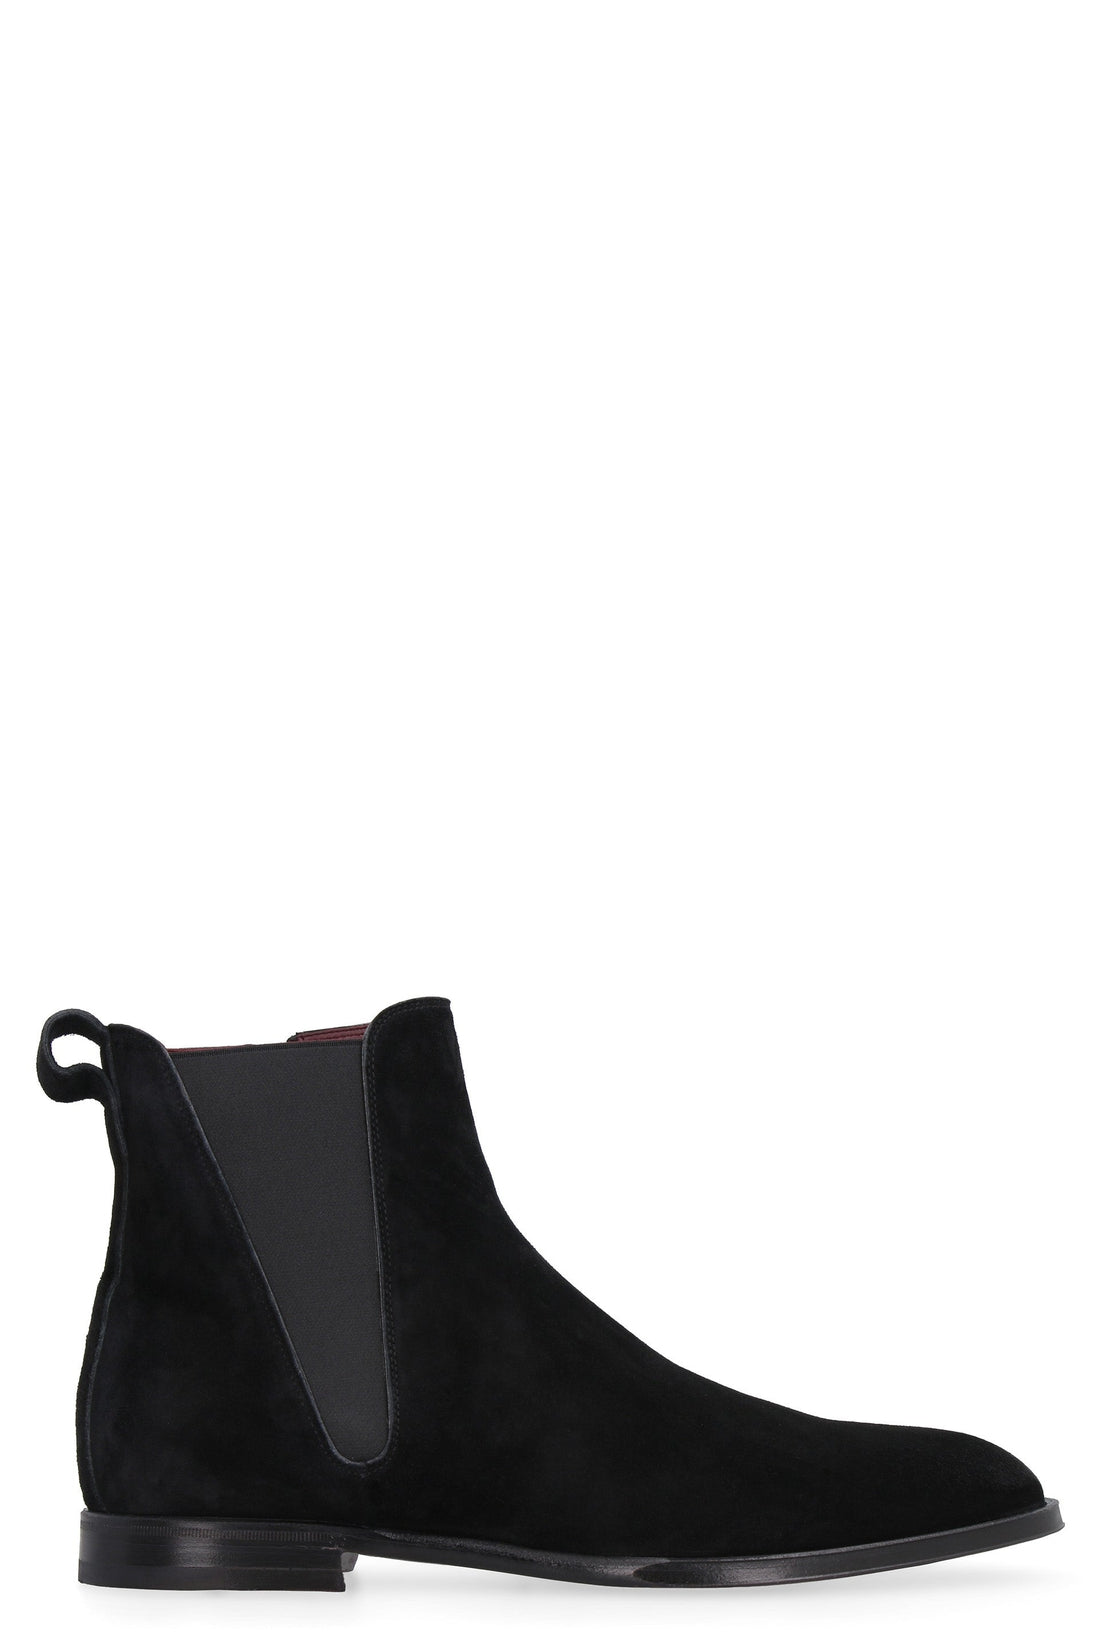 Dolce & Gabbana-OUTLET-SALE-Suede ankle boots-ARCHIVIST